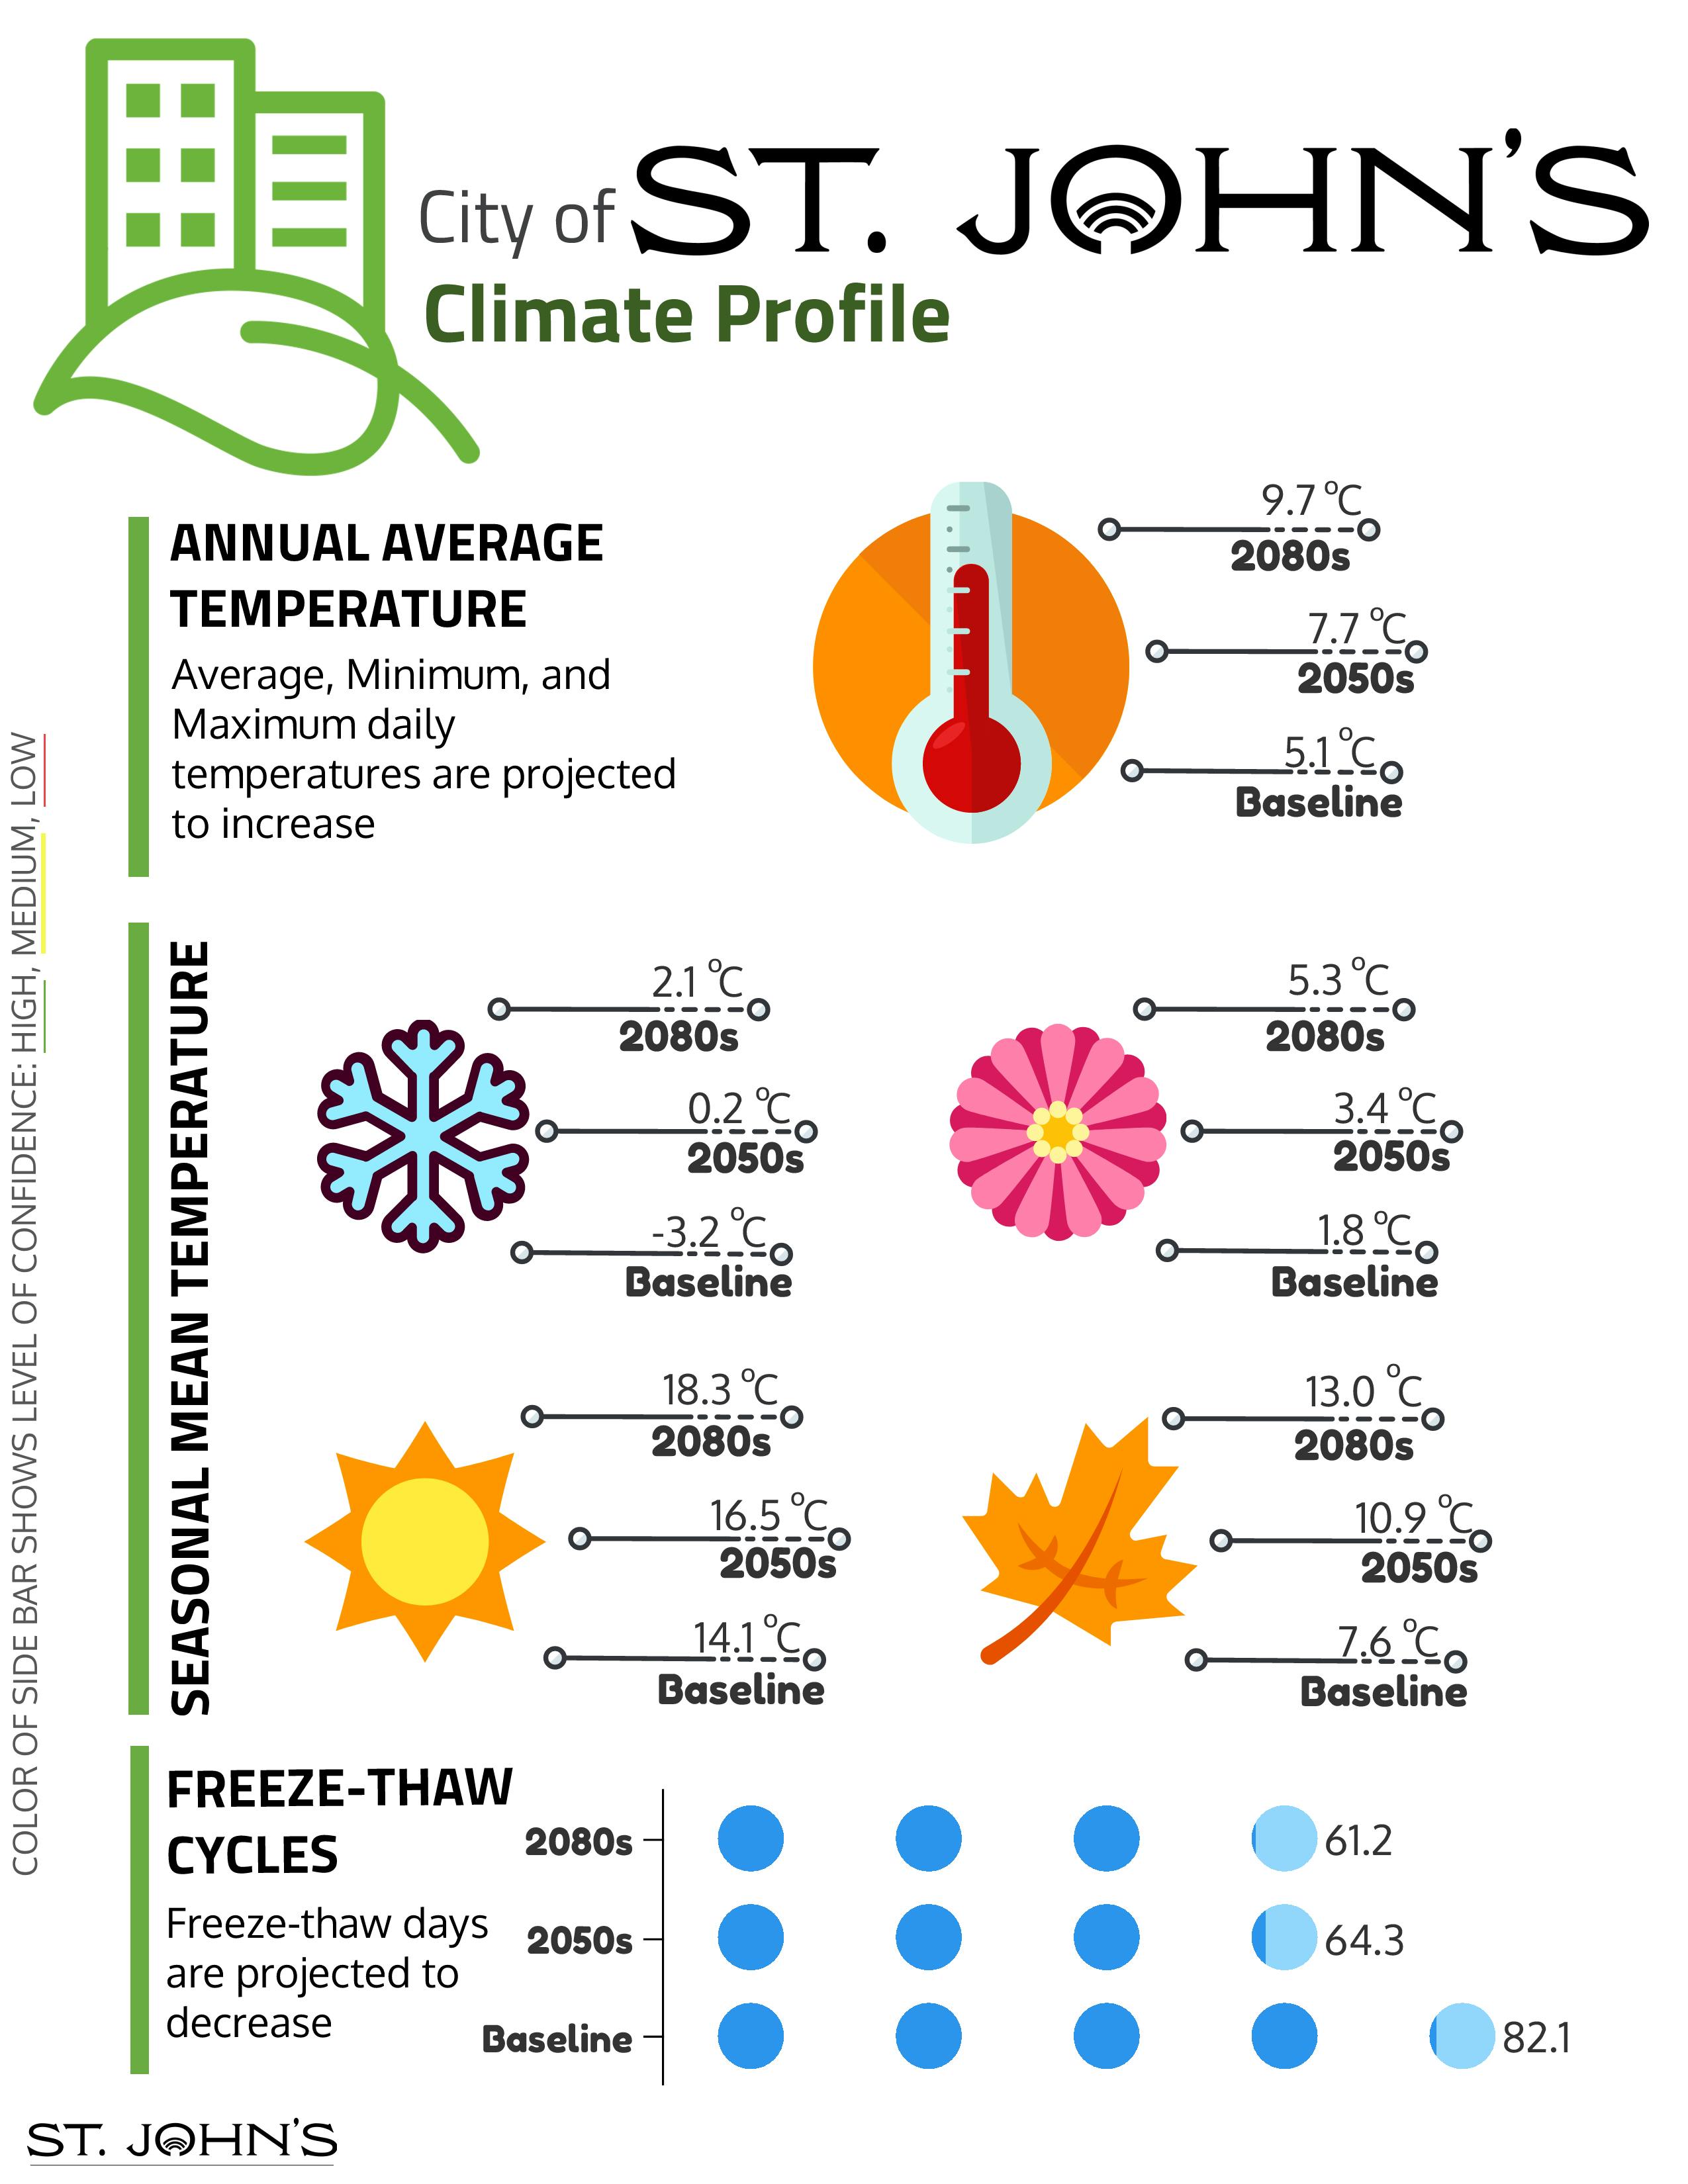 St. John's Climate Profile - Temperature